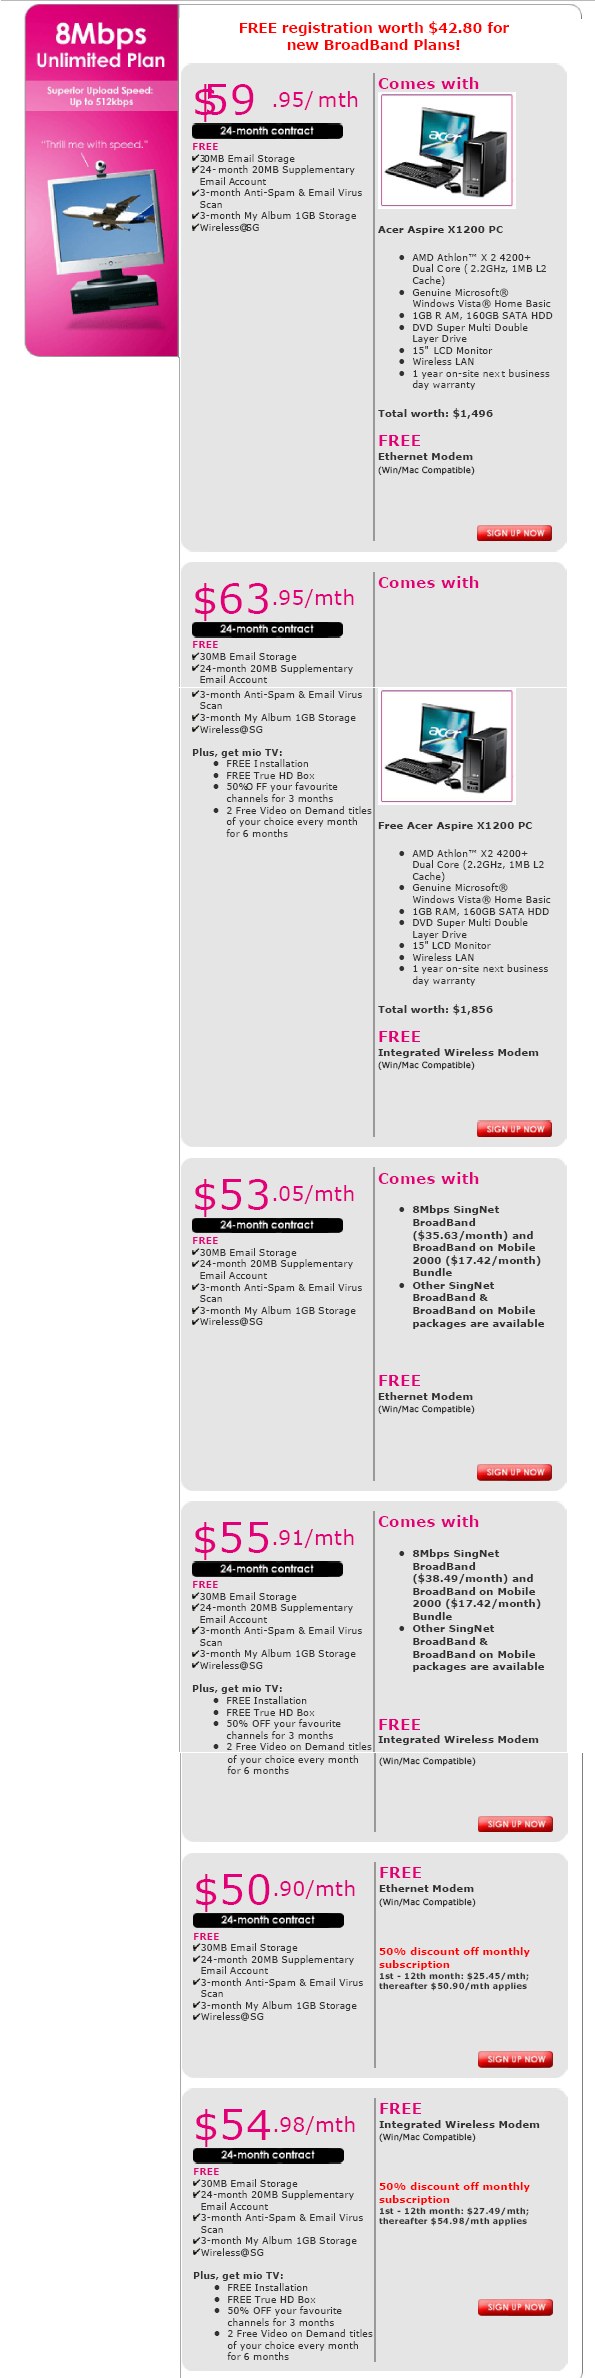 PC Show 2008 price list image brochure of Singnet Broadband 8